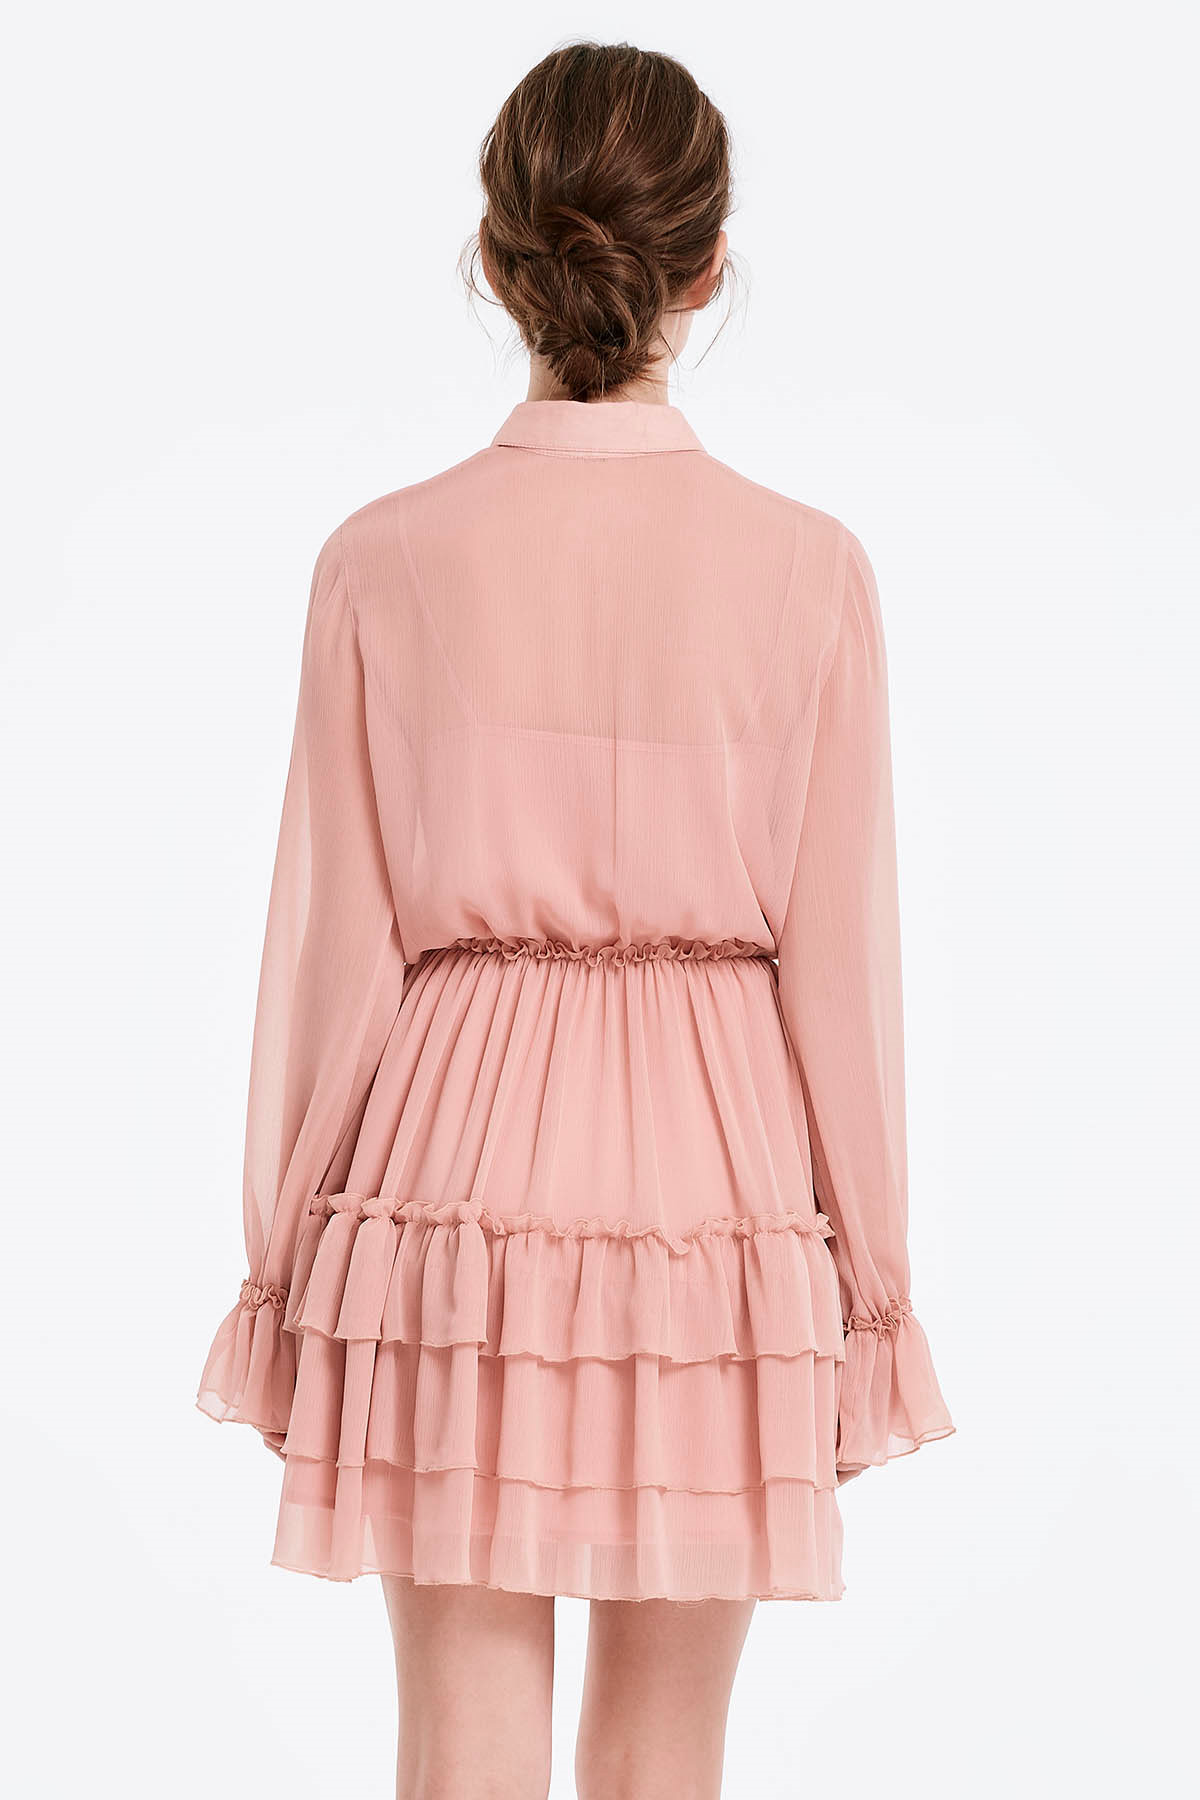 Powder pink dress with flounces, photo 2